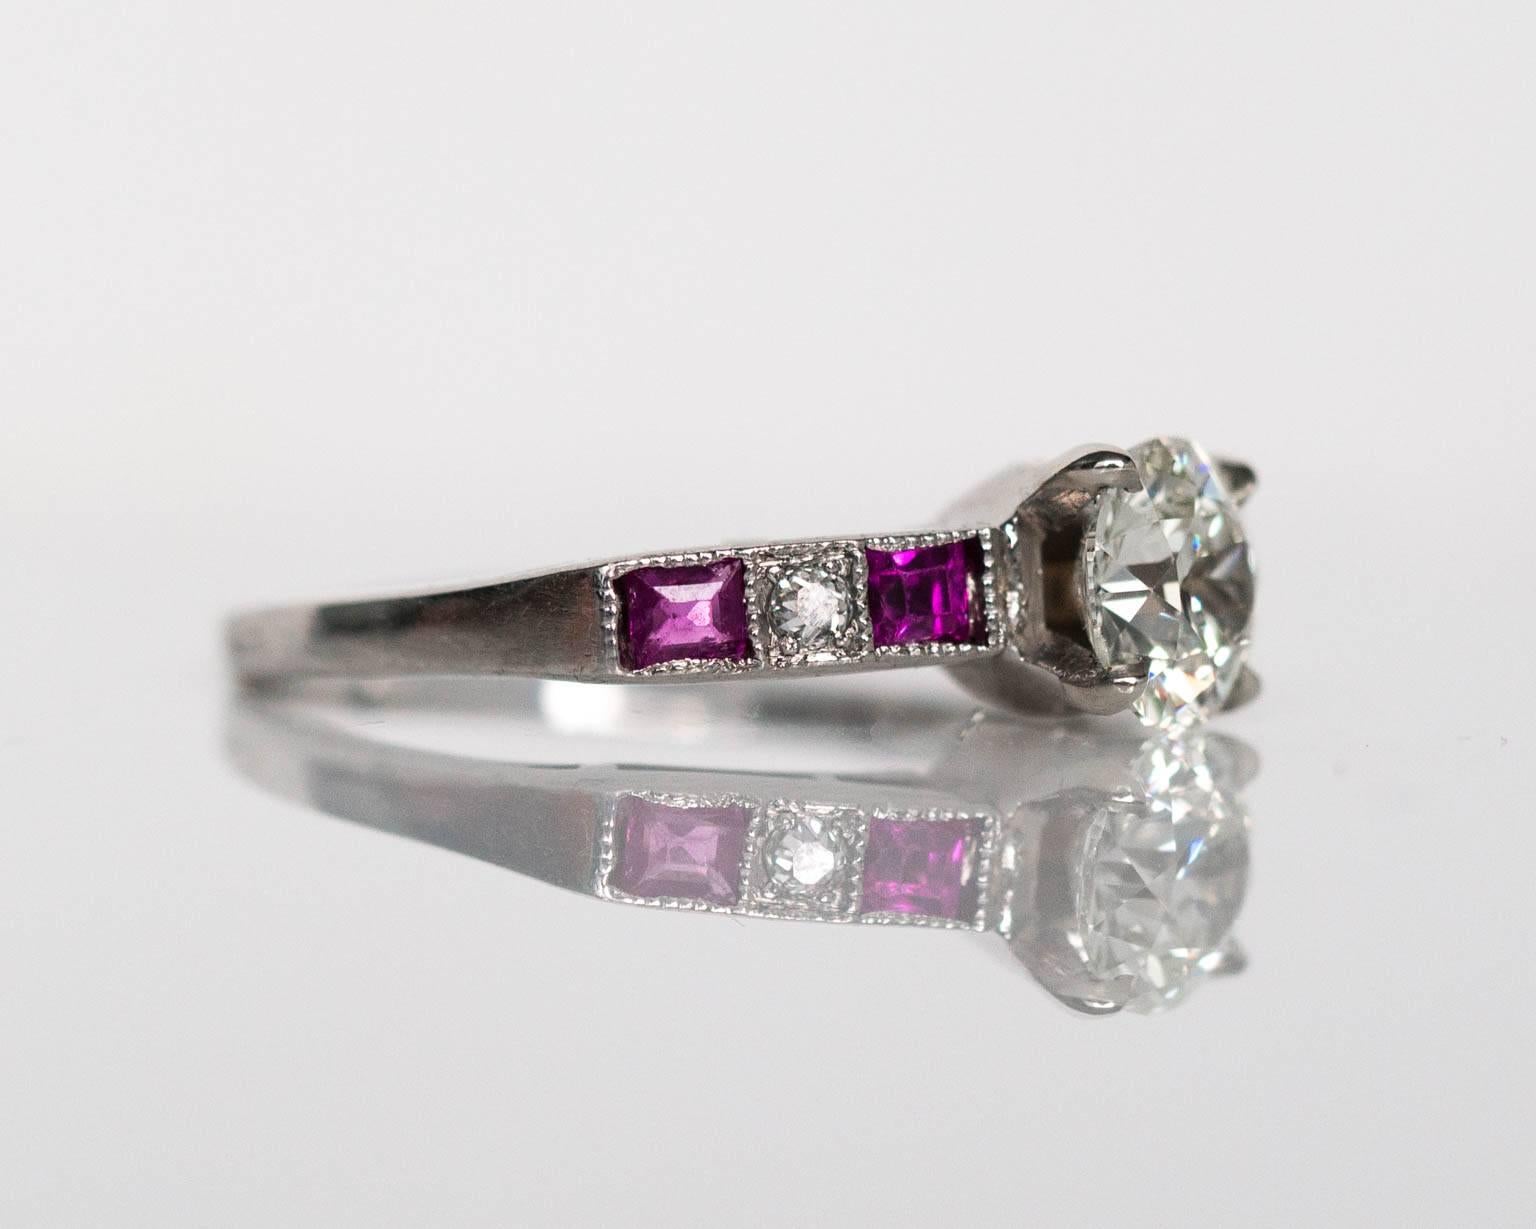 1940s Art Deco 1.01 Carat GIA Certified European Cut Diamond Ruby Platinum Ring For Sale 4